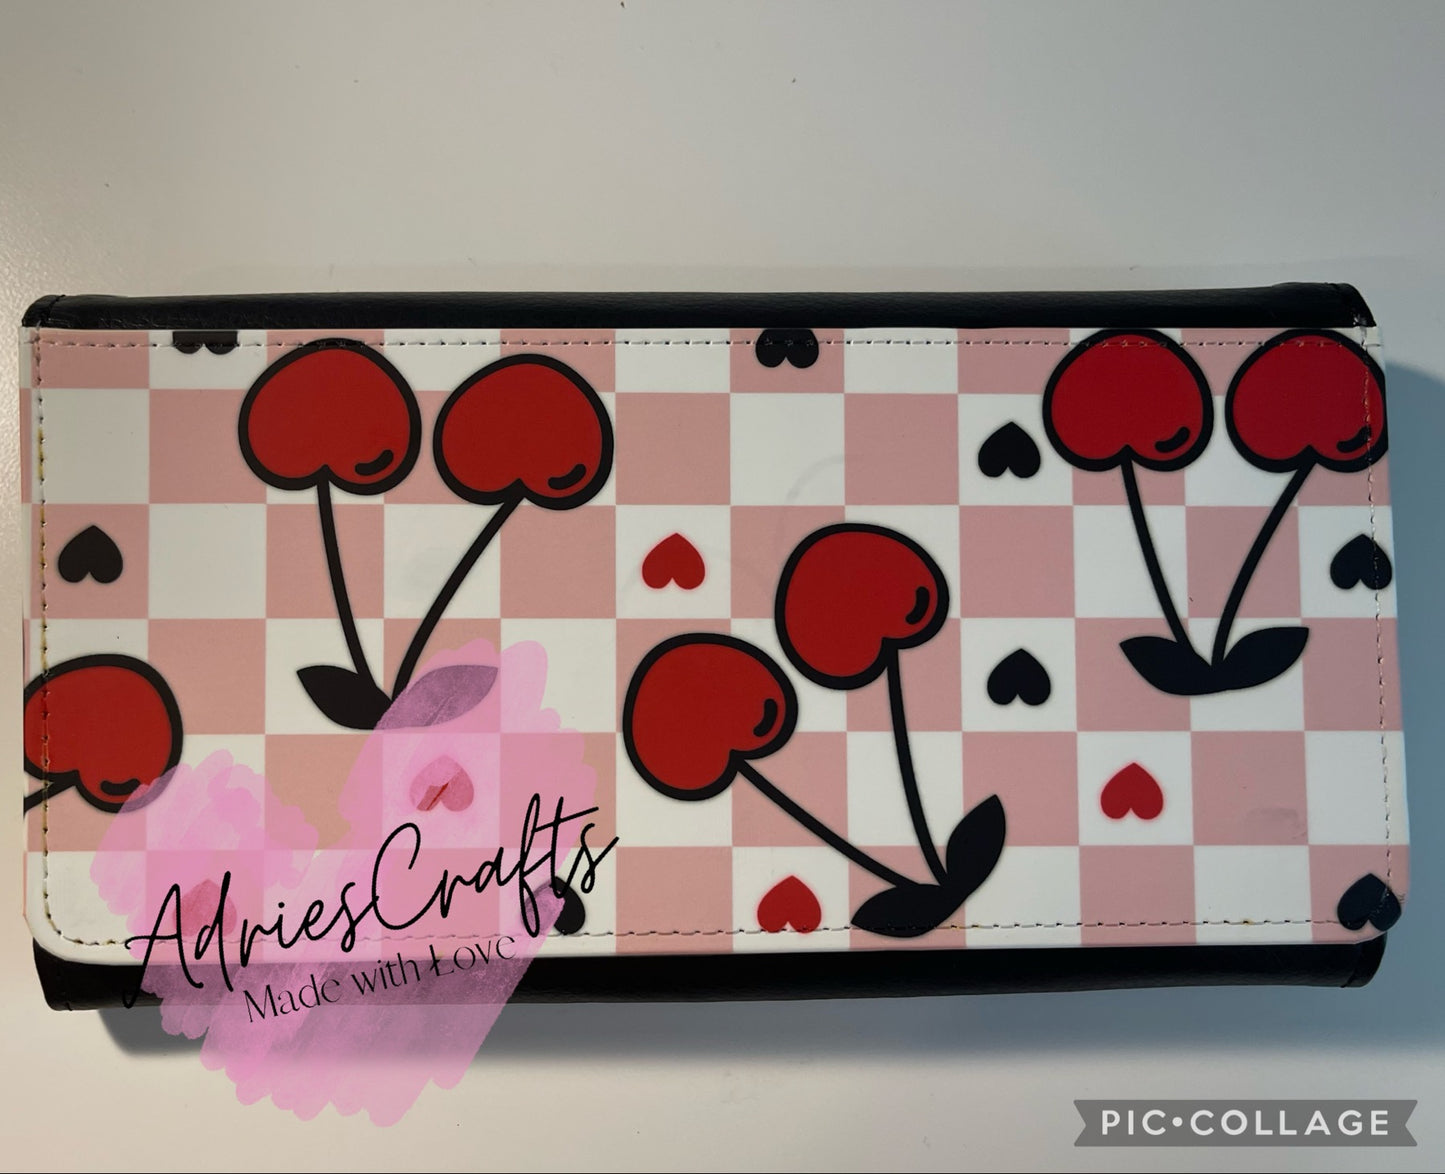 Cherry Heart Wallet